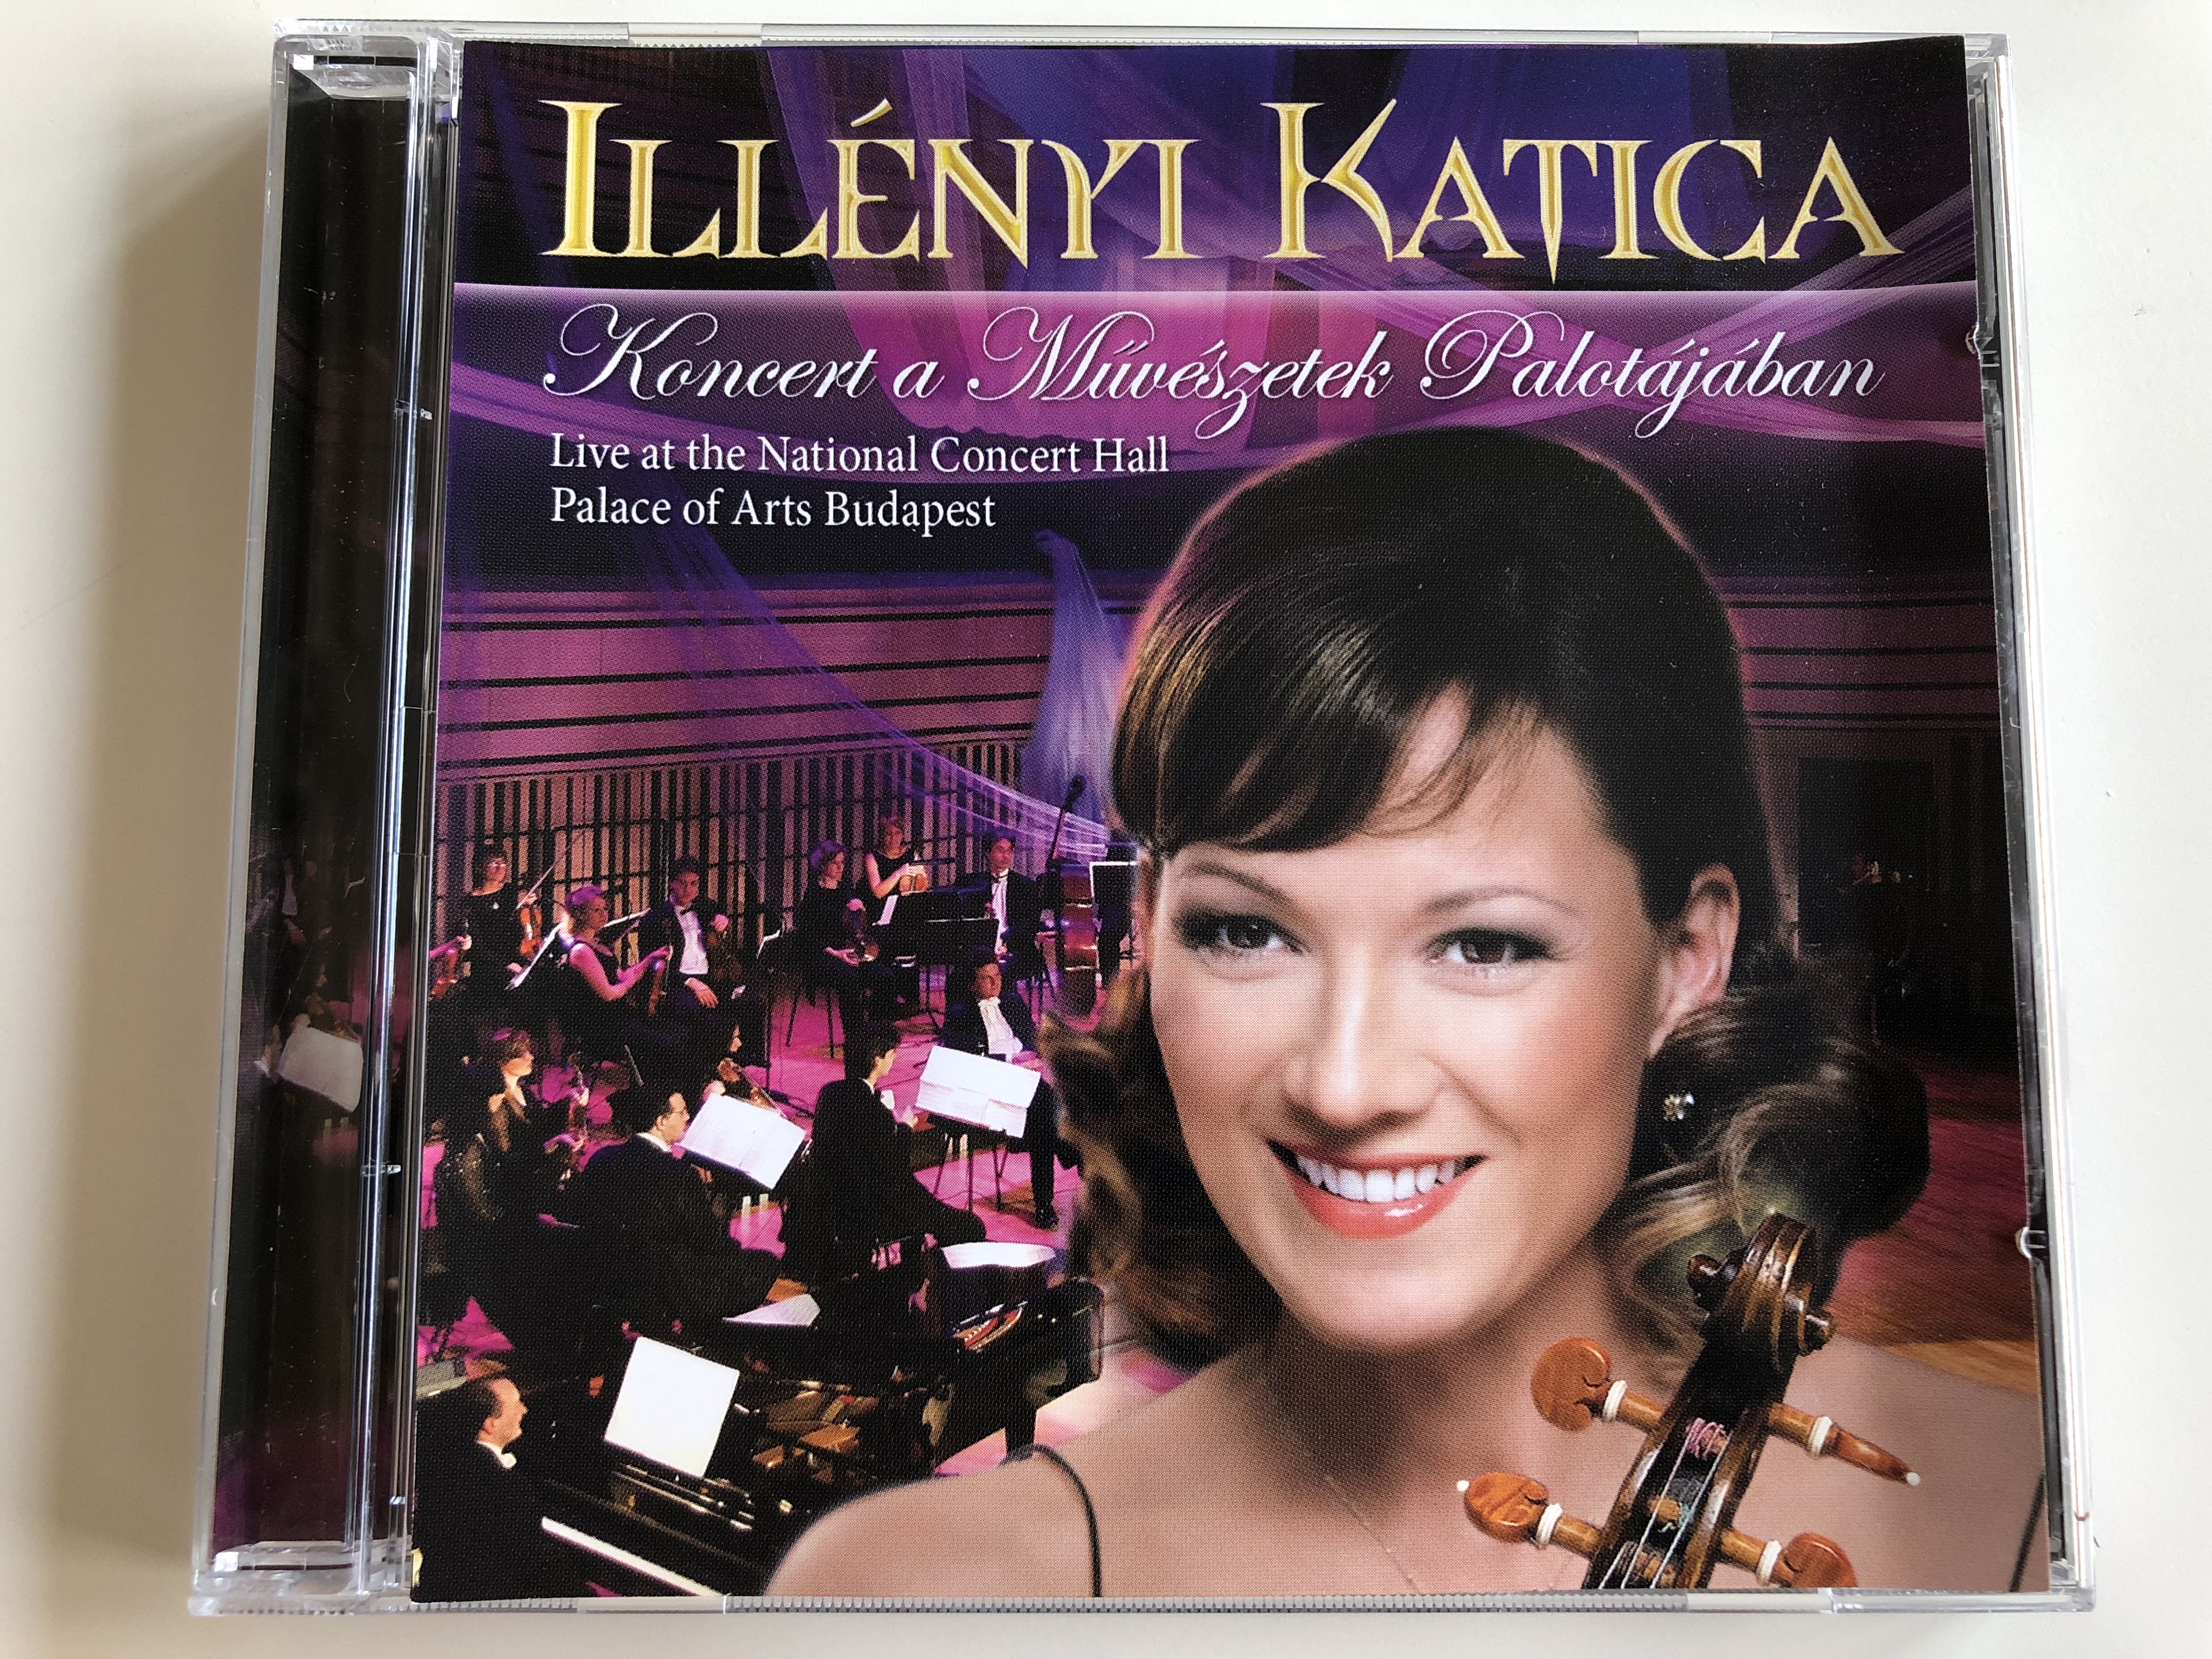 ill-nyi-katica-live-at-the-national-concert-hall-palace-of-arts-budapest-koncert-a-m-v-szetek-palot-j-ban-audio-cd-2006-ikp-1-.jpg